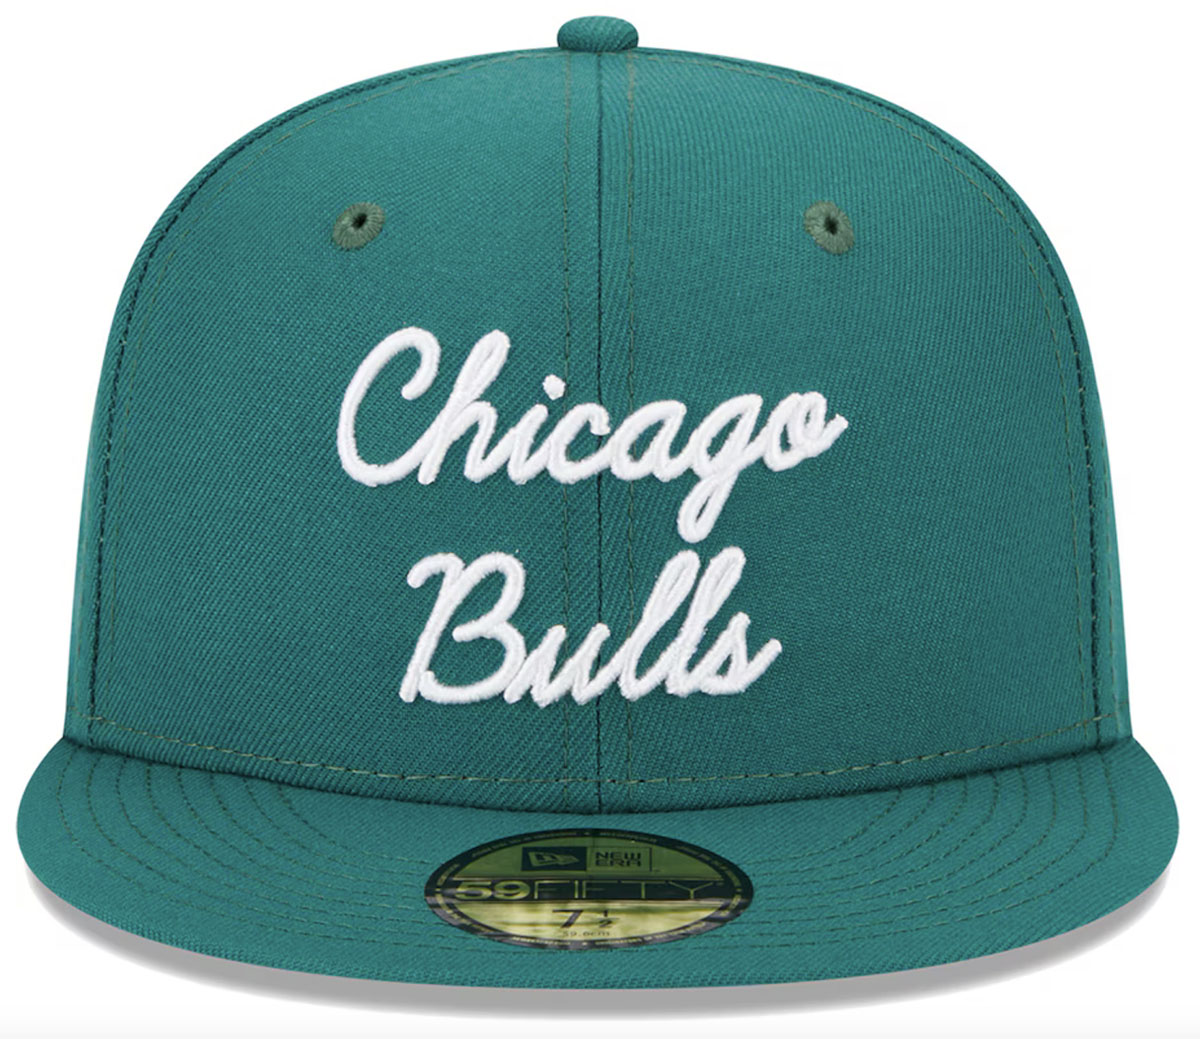 Chicago-Bulls-New-Era-Fitted-Hat-Augusta-Green-2